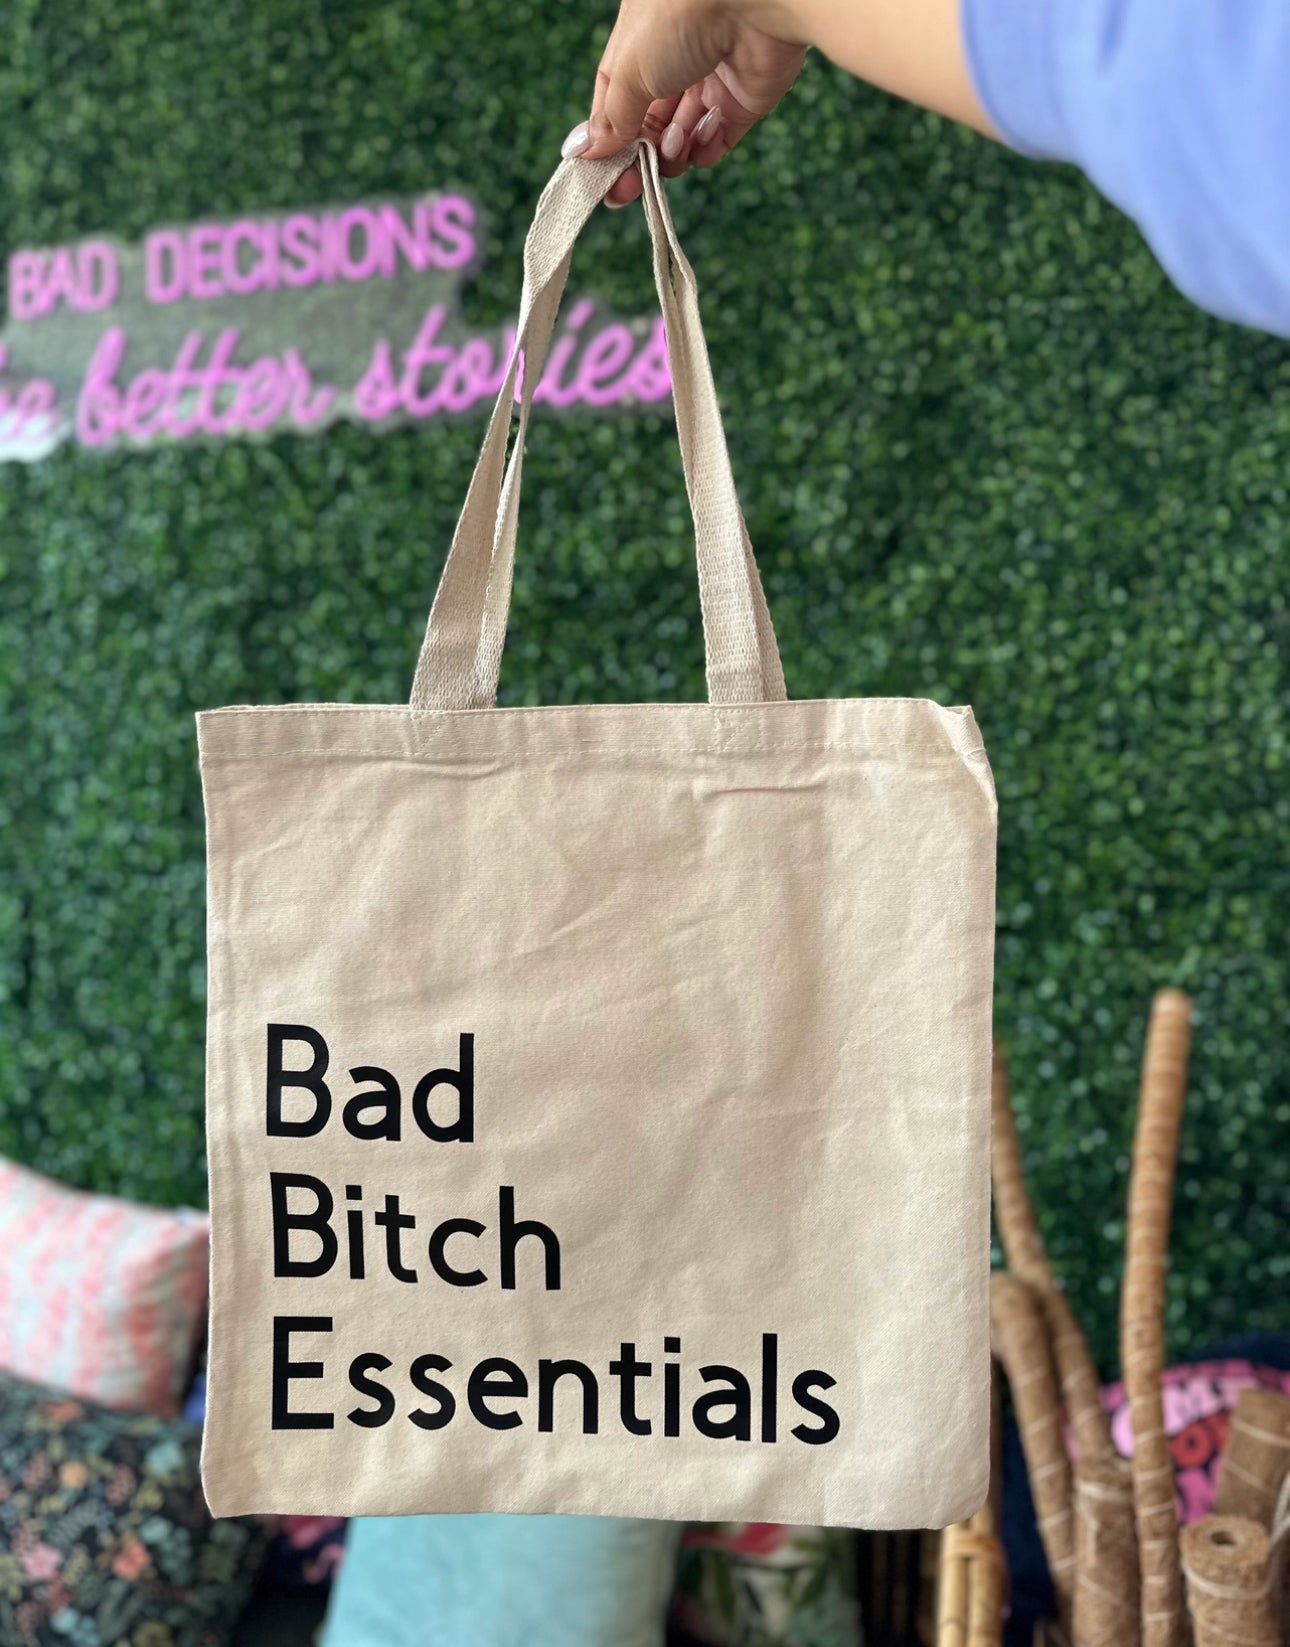 Bad bitch essentials tote